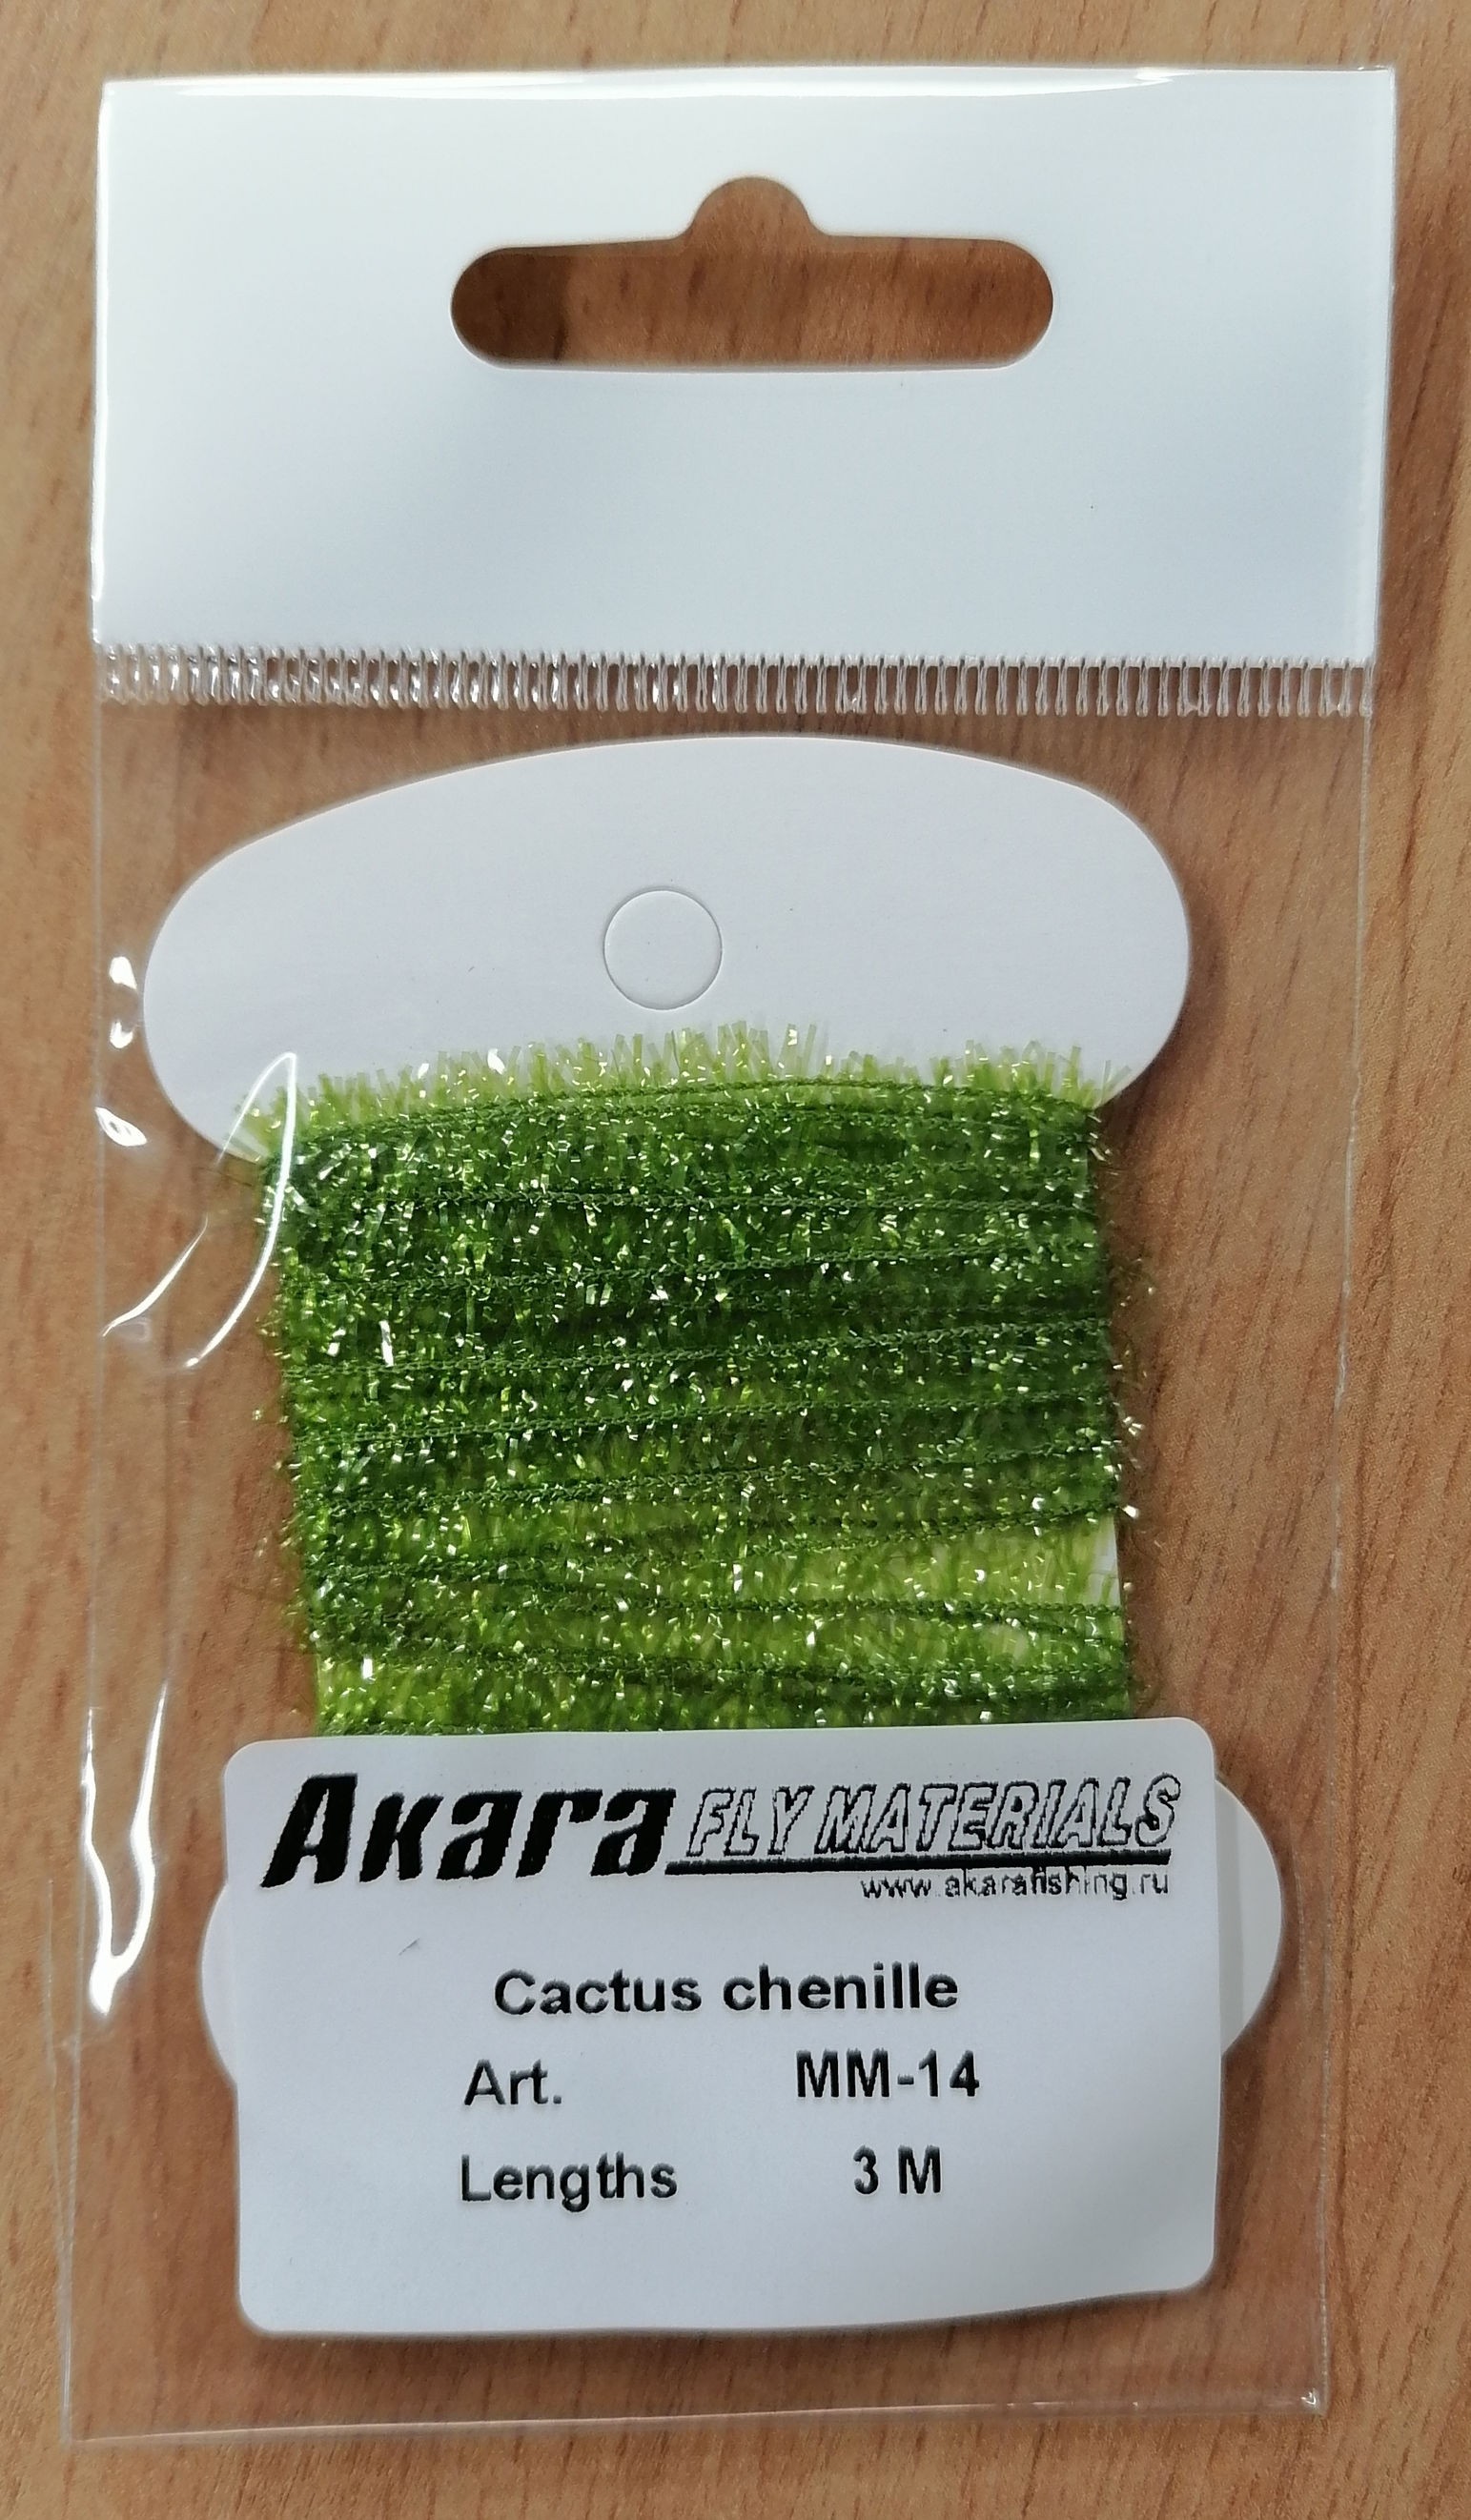 @ Материал для вязки мушек AKARA Cactus Chenille MM-14 (3,0 m, цвет: зеленый)